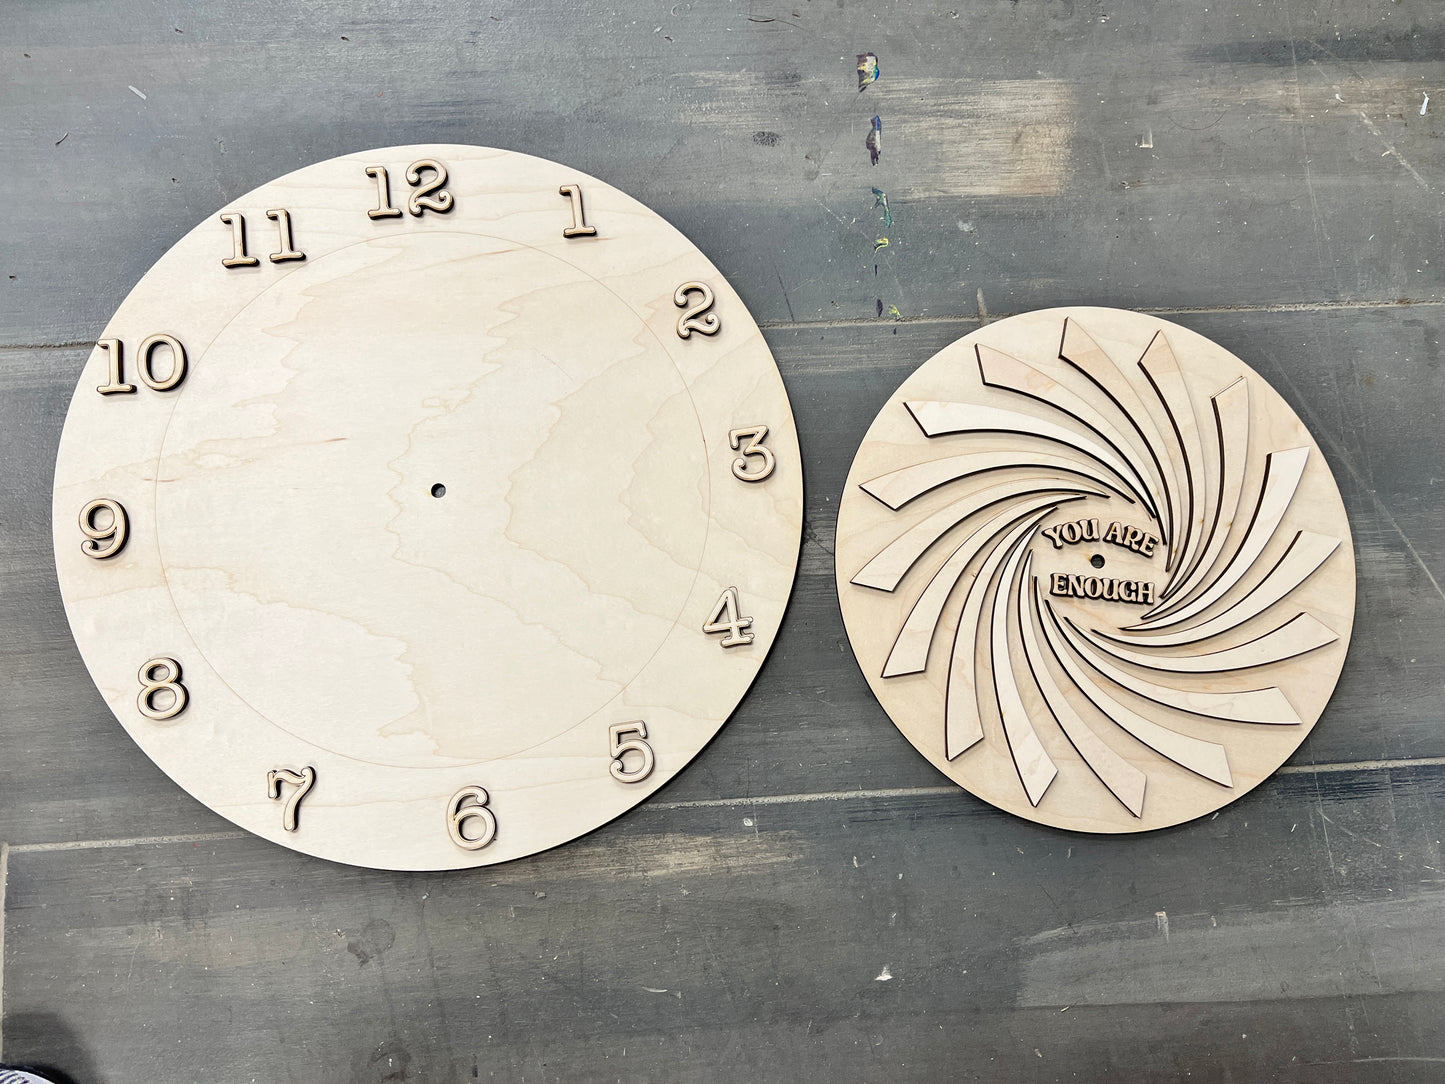 Wood Layered Laser Cut Clocks